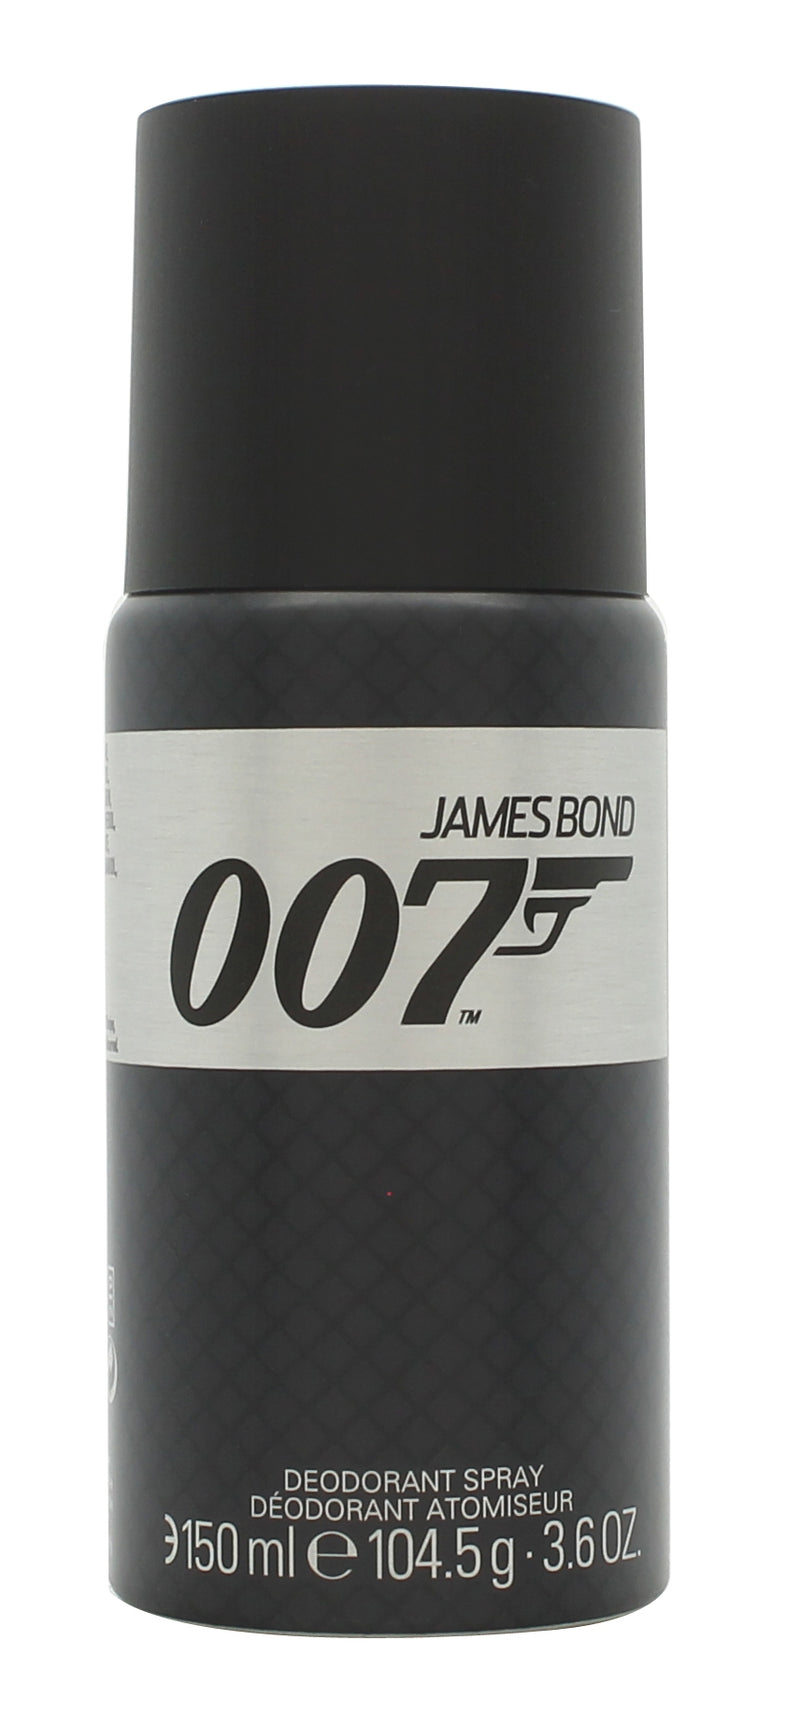 James Bond James Bond 007 Deodorant 150ml Spray